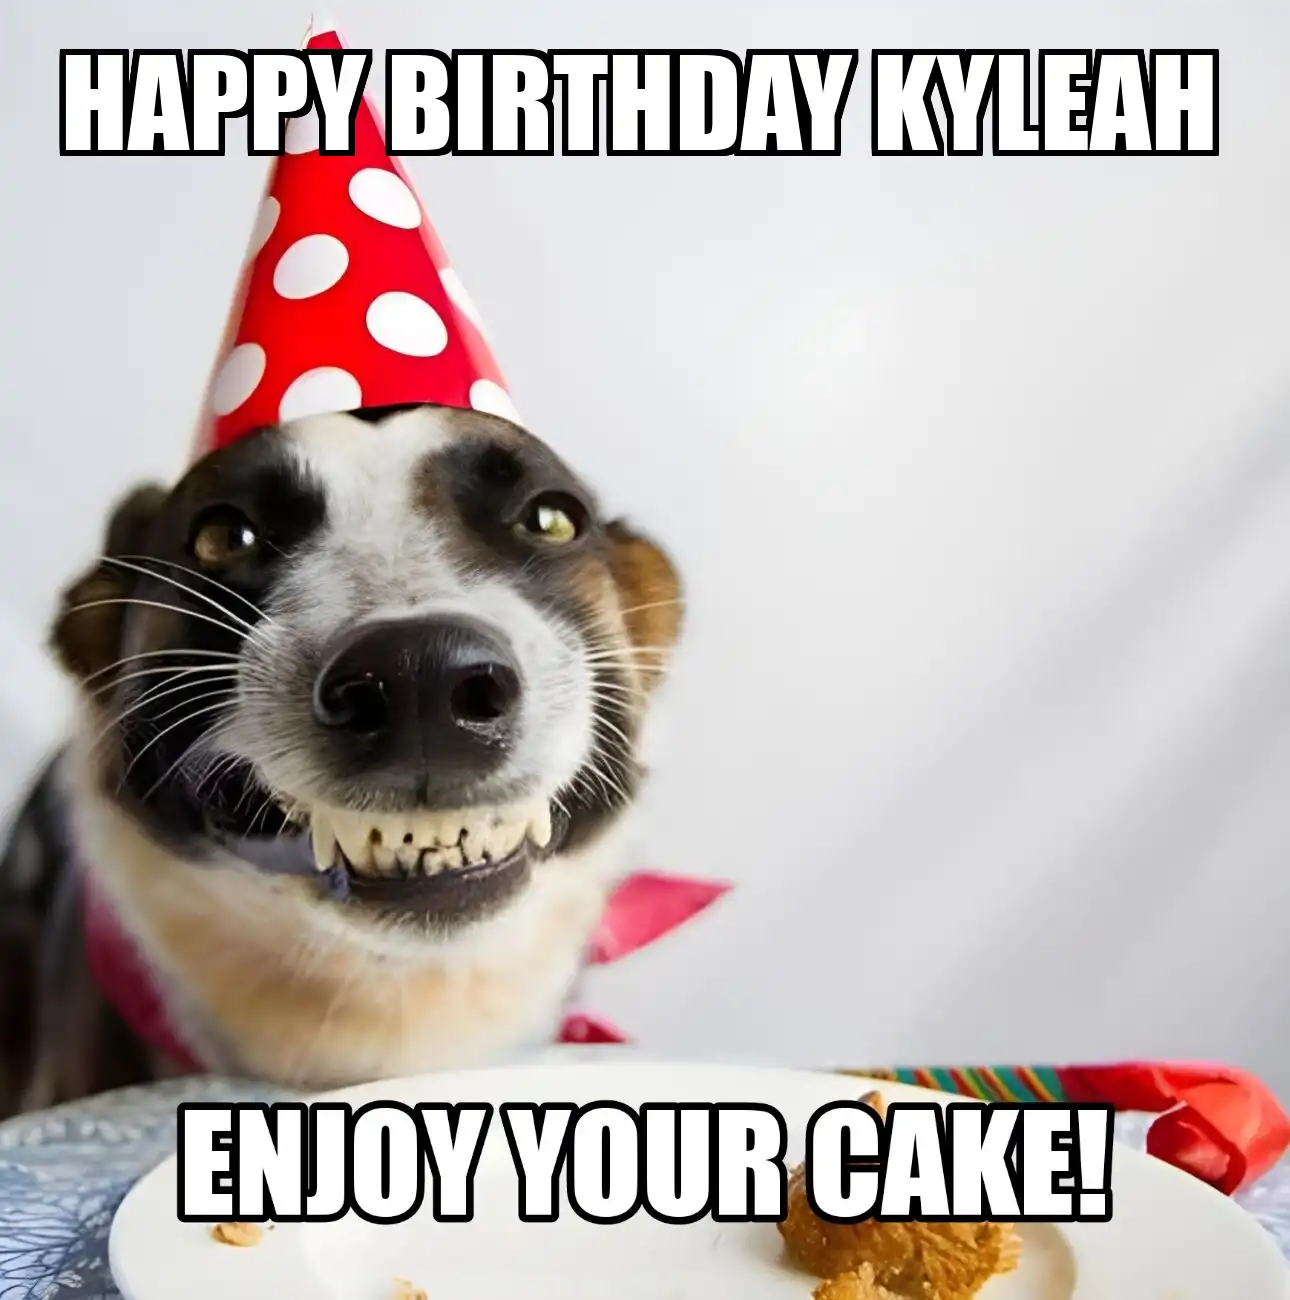 Happy Birthday Kyleah Enjoy Your Cake Dog Meme